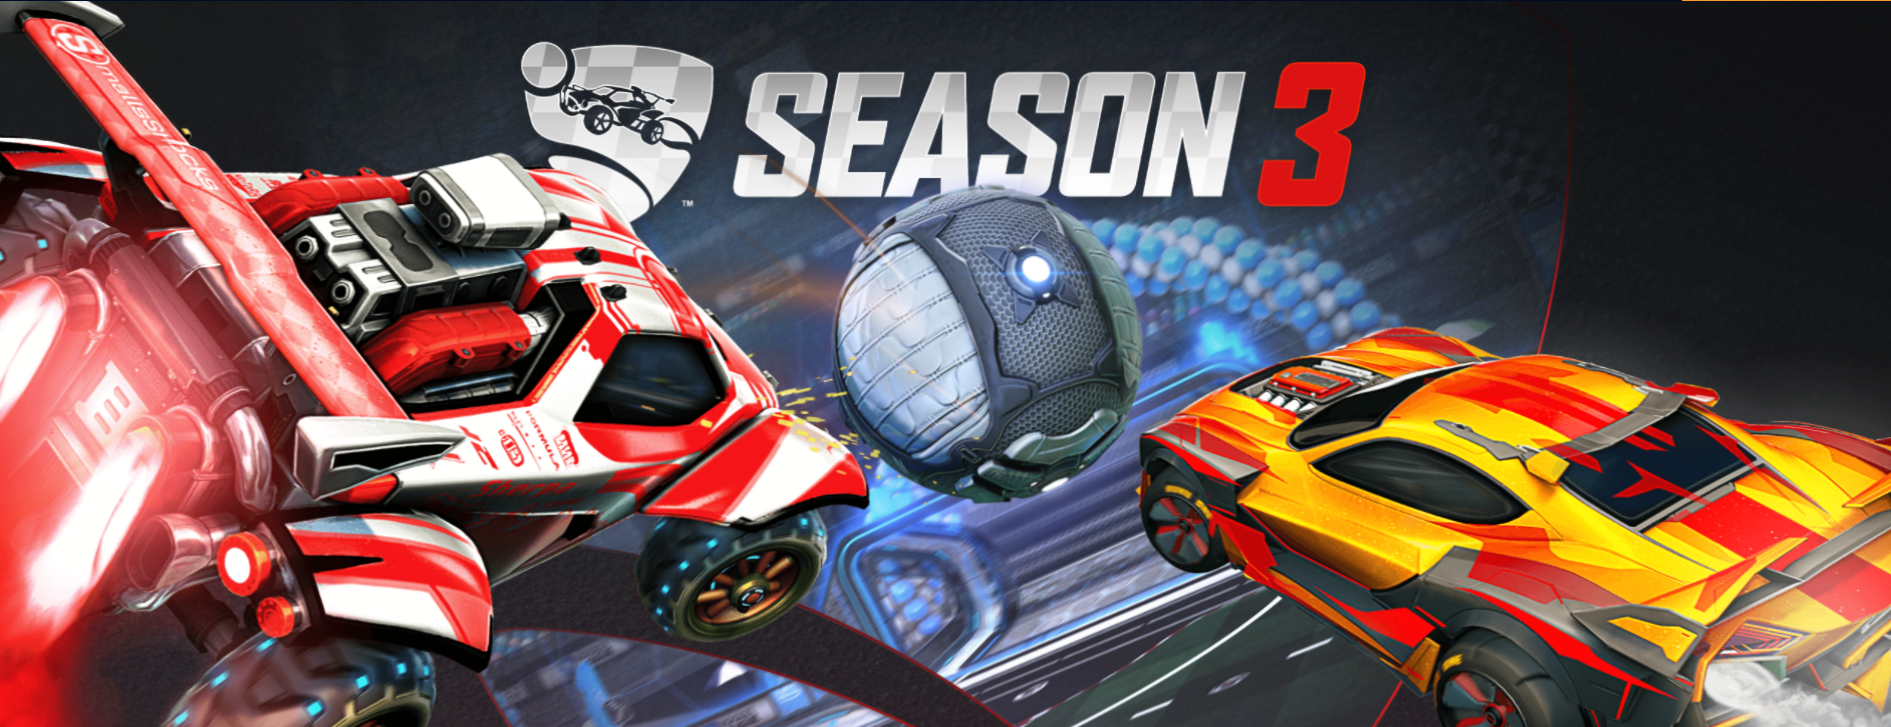 Rocket League game season 3 logo with cars hitting the metal